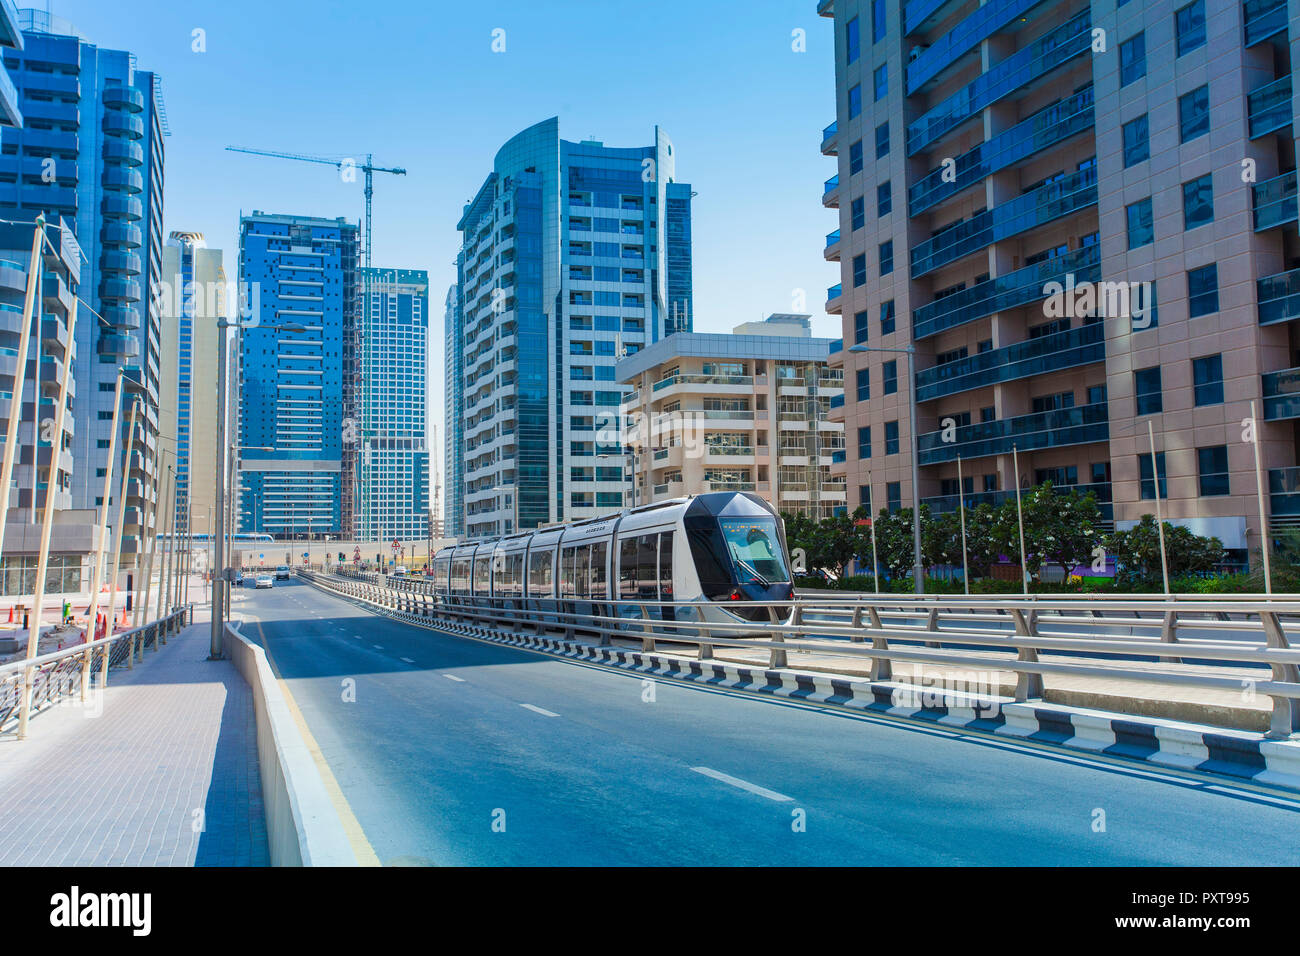 Dubai city tram on modern railway. United Arab Emirates Stock Photo